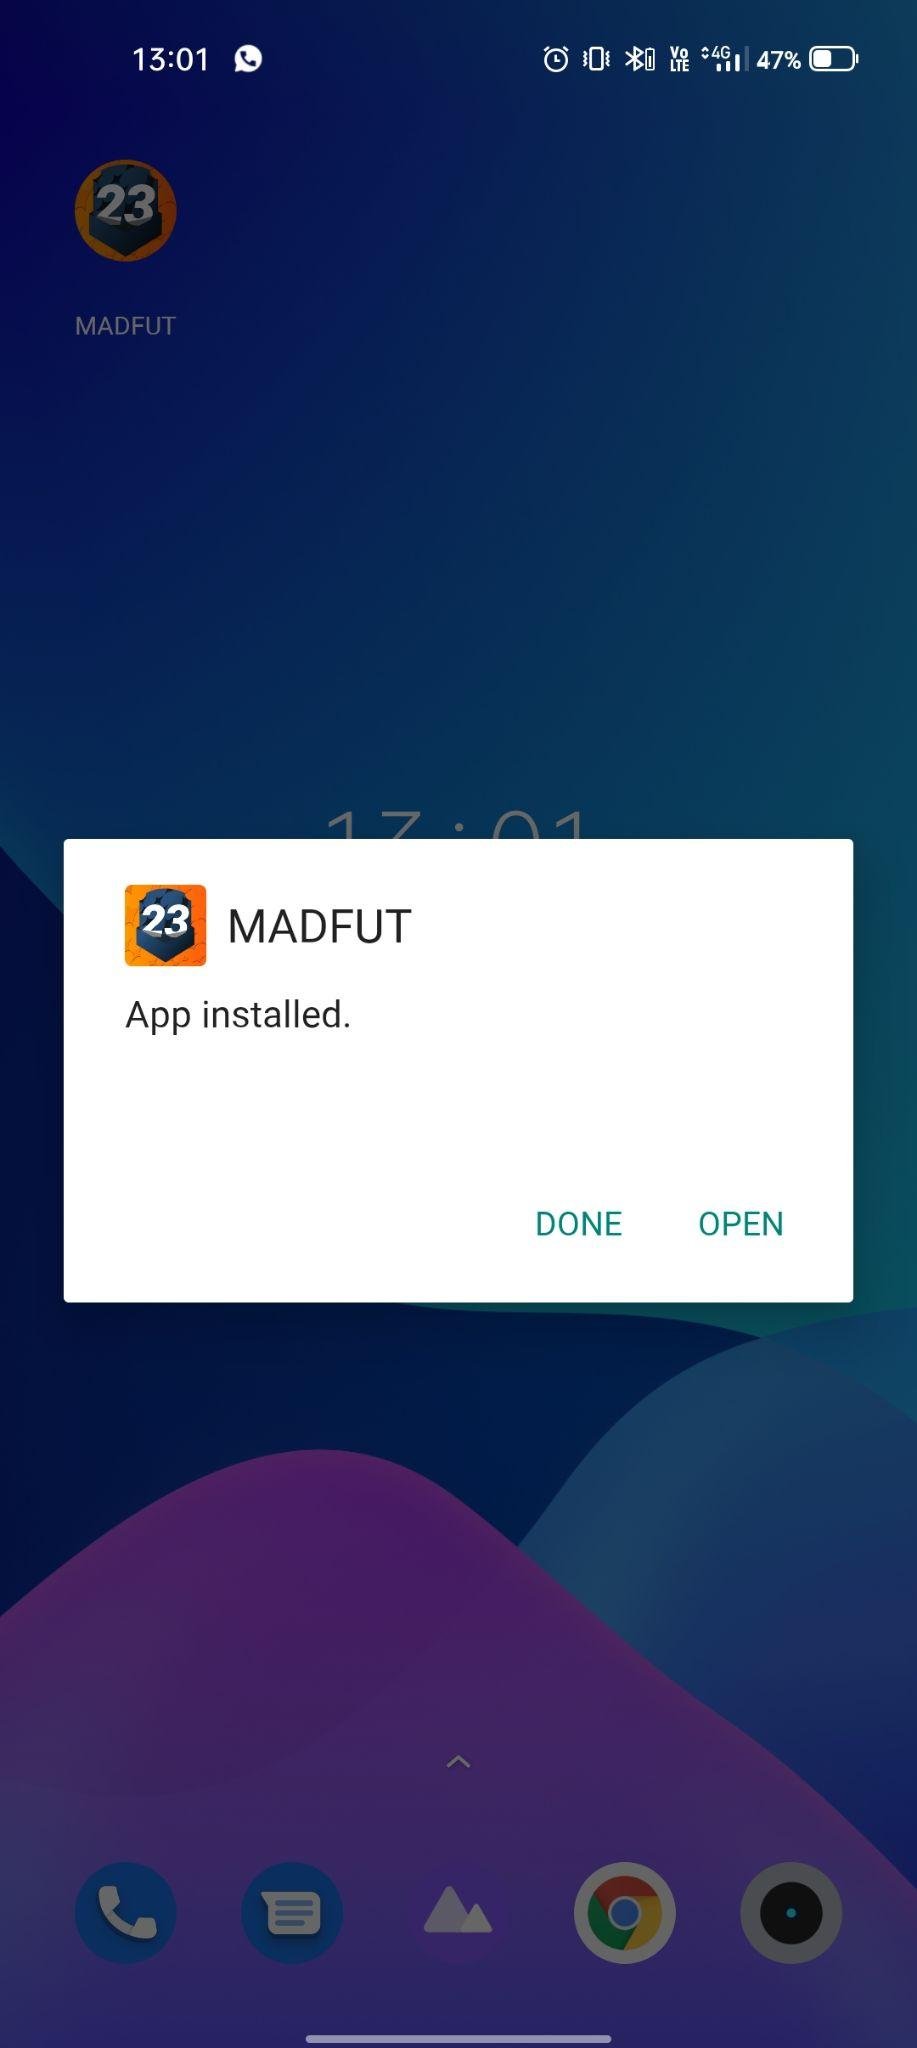 MADFUT 23 mod apk installed